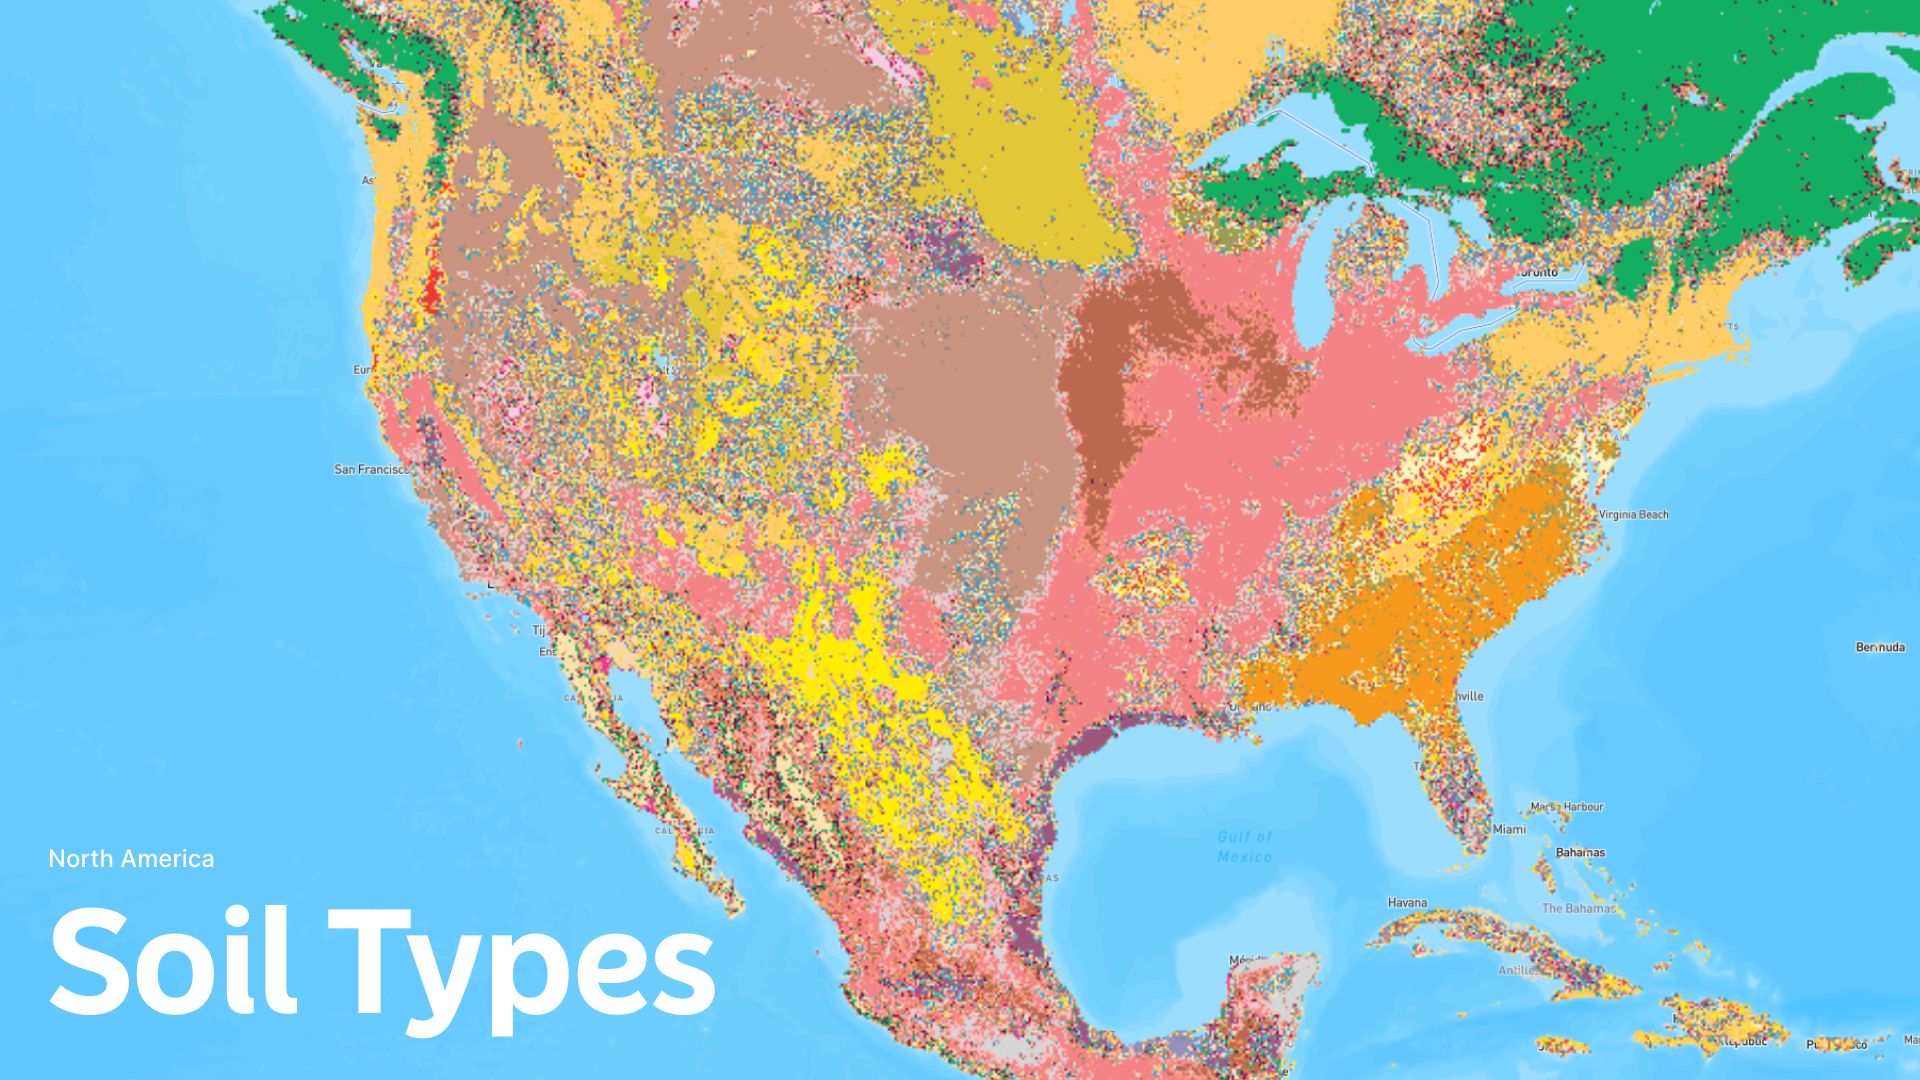 Soil Types in North America